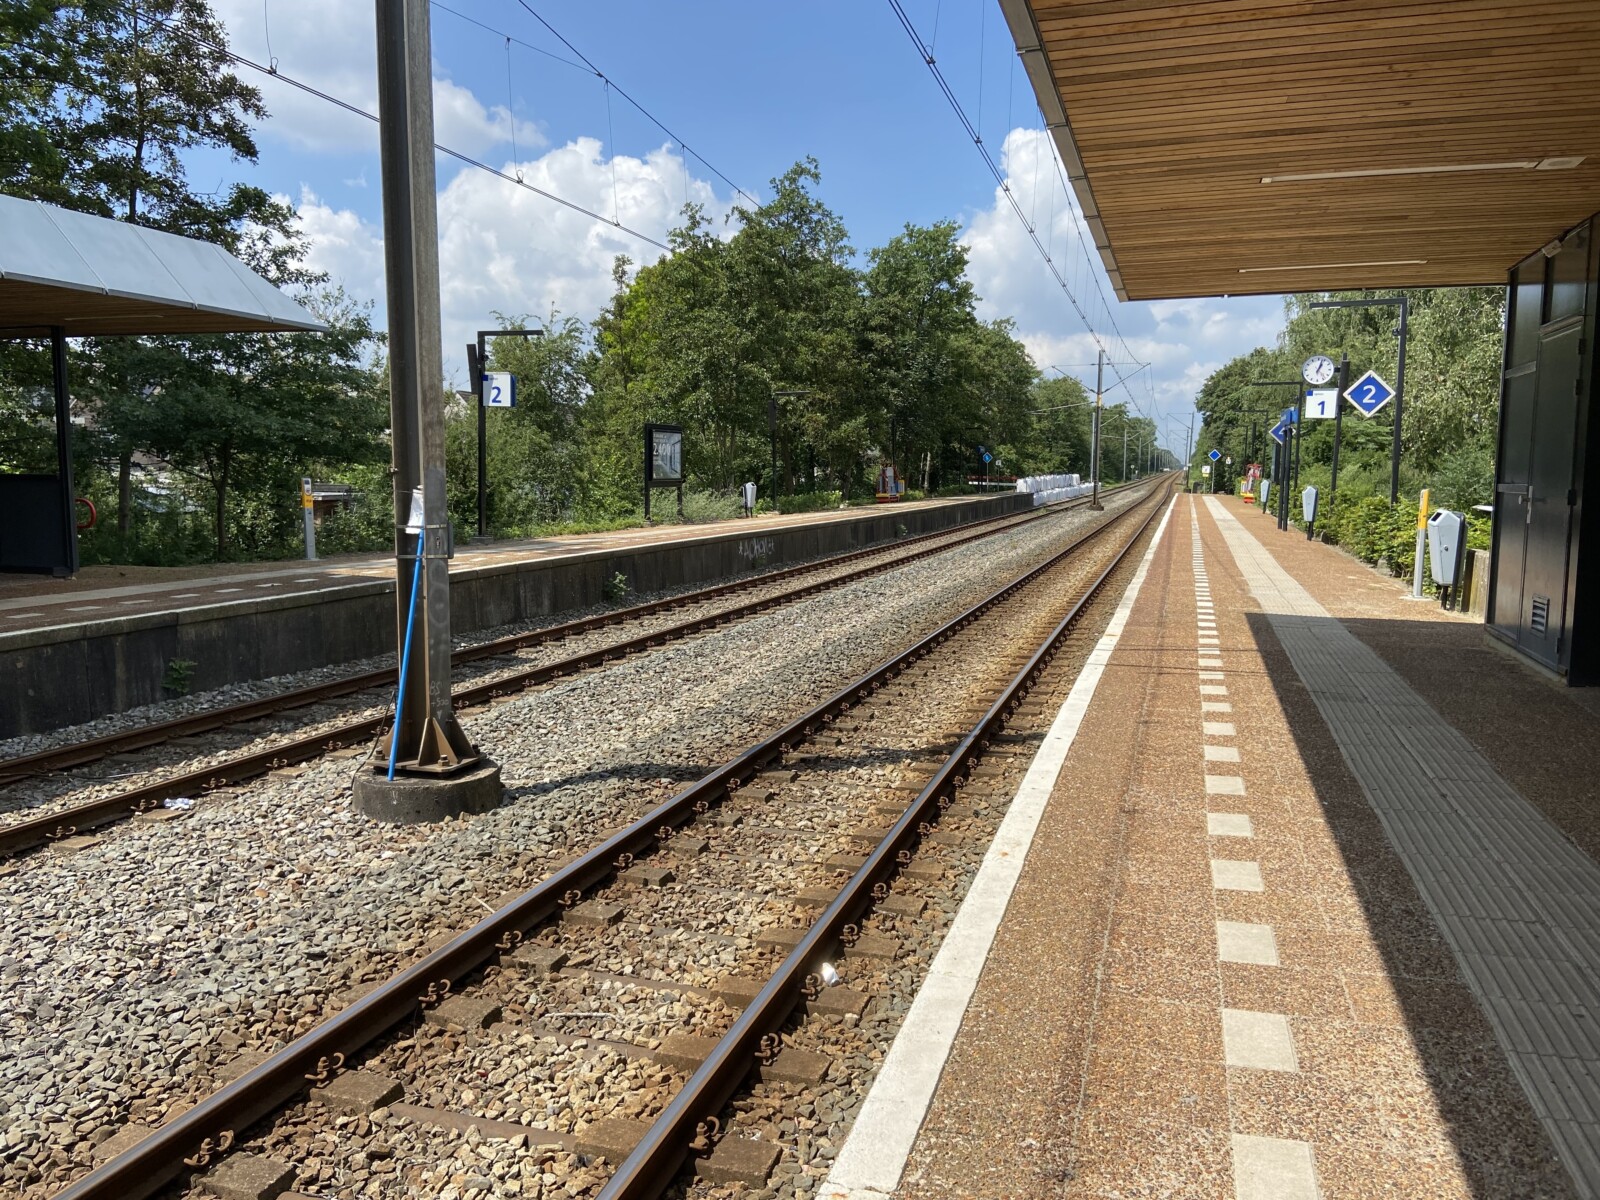 Station Veenendaal west